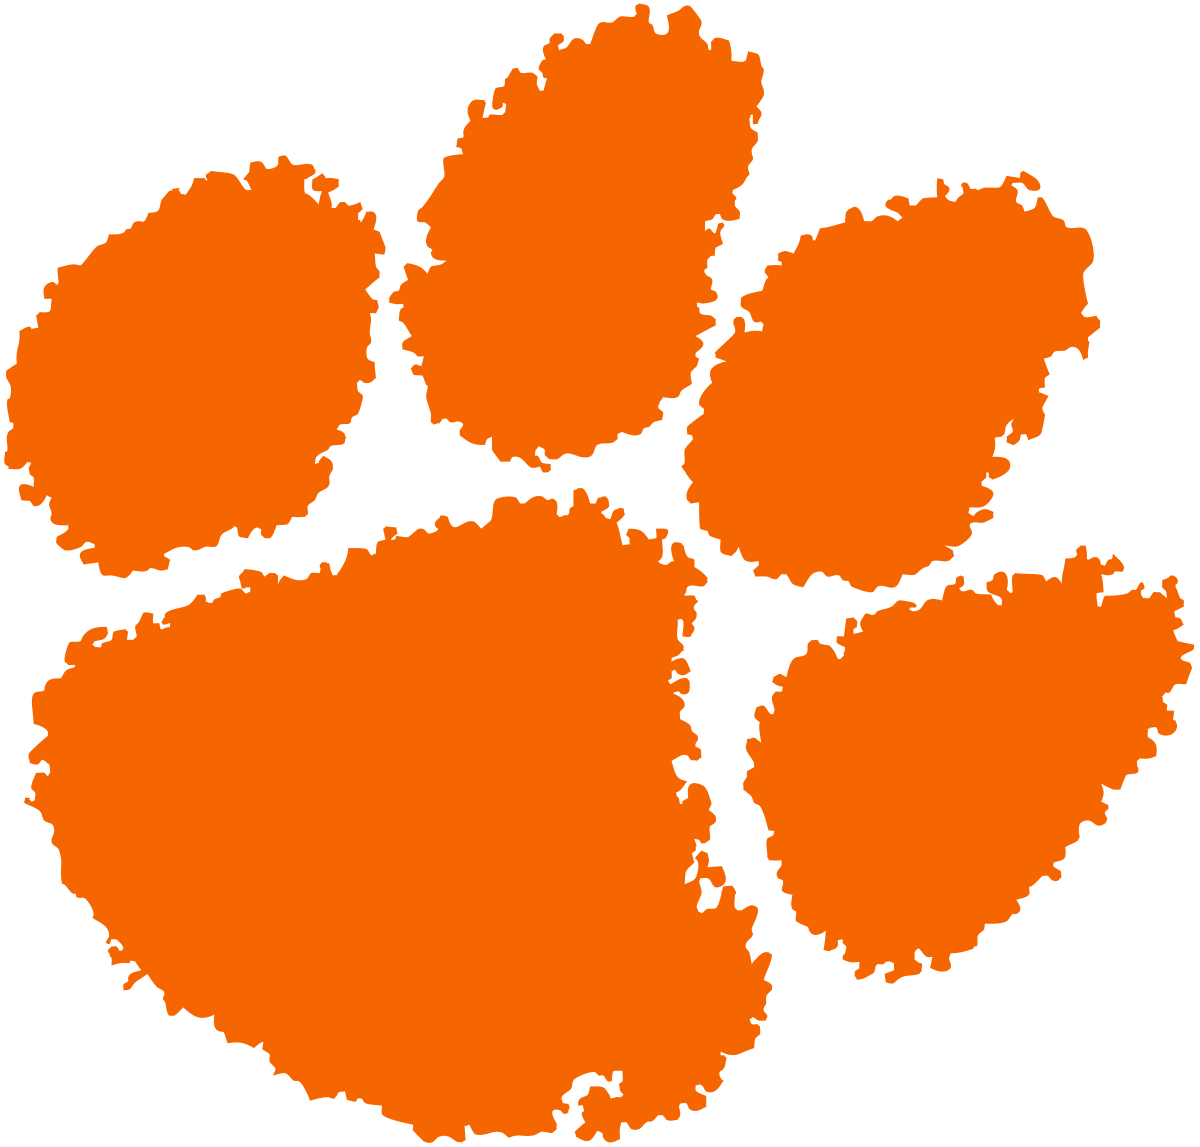 Clemson Tigers softball - Wikipedia